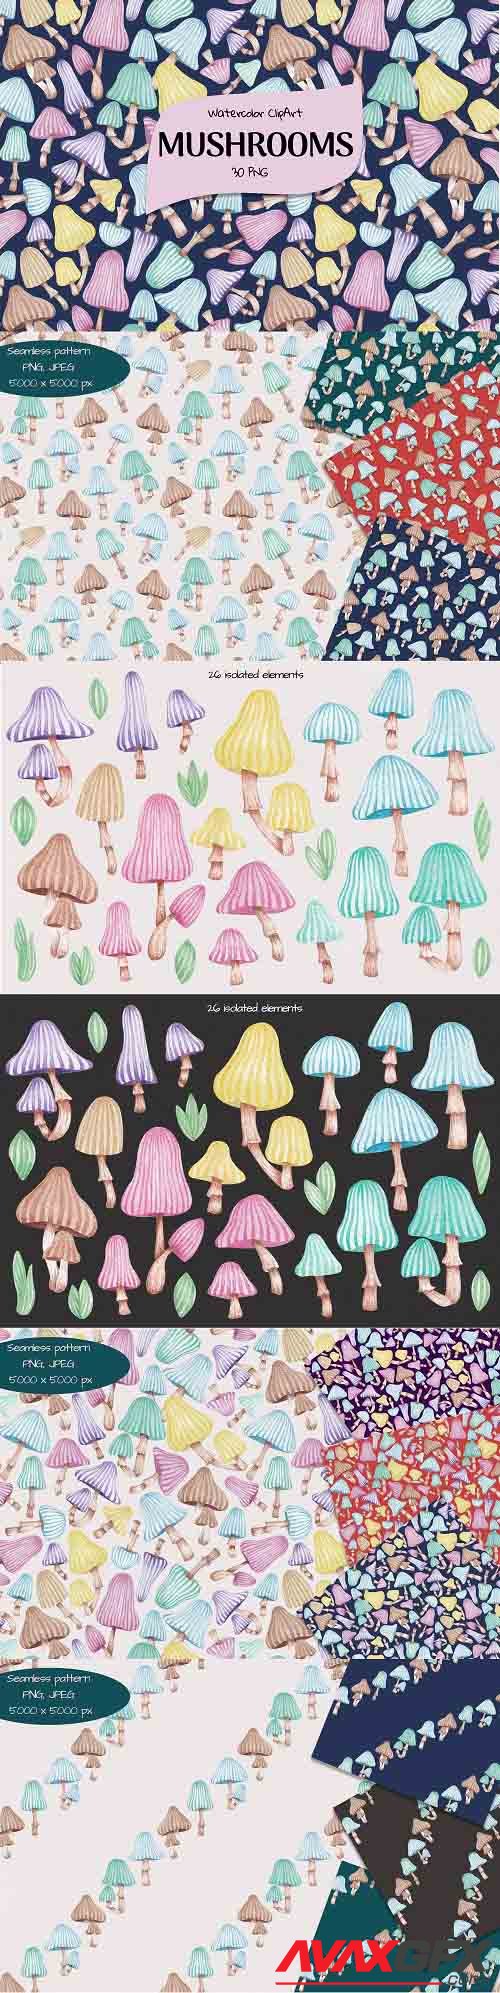 Watercolor ClipArt Mushrooms - 1389527